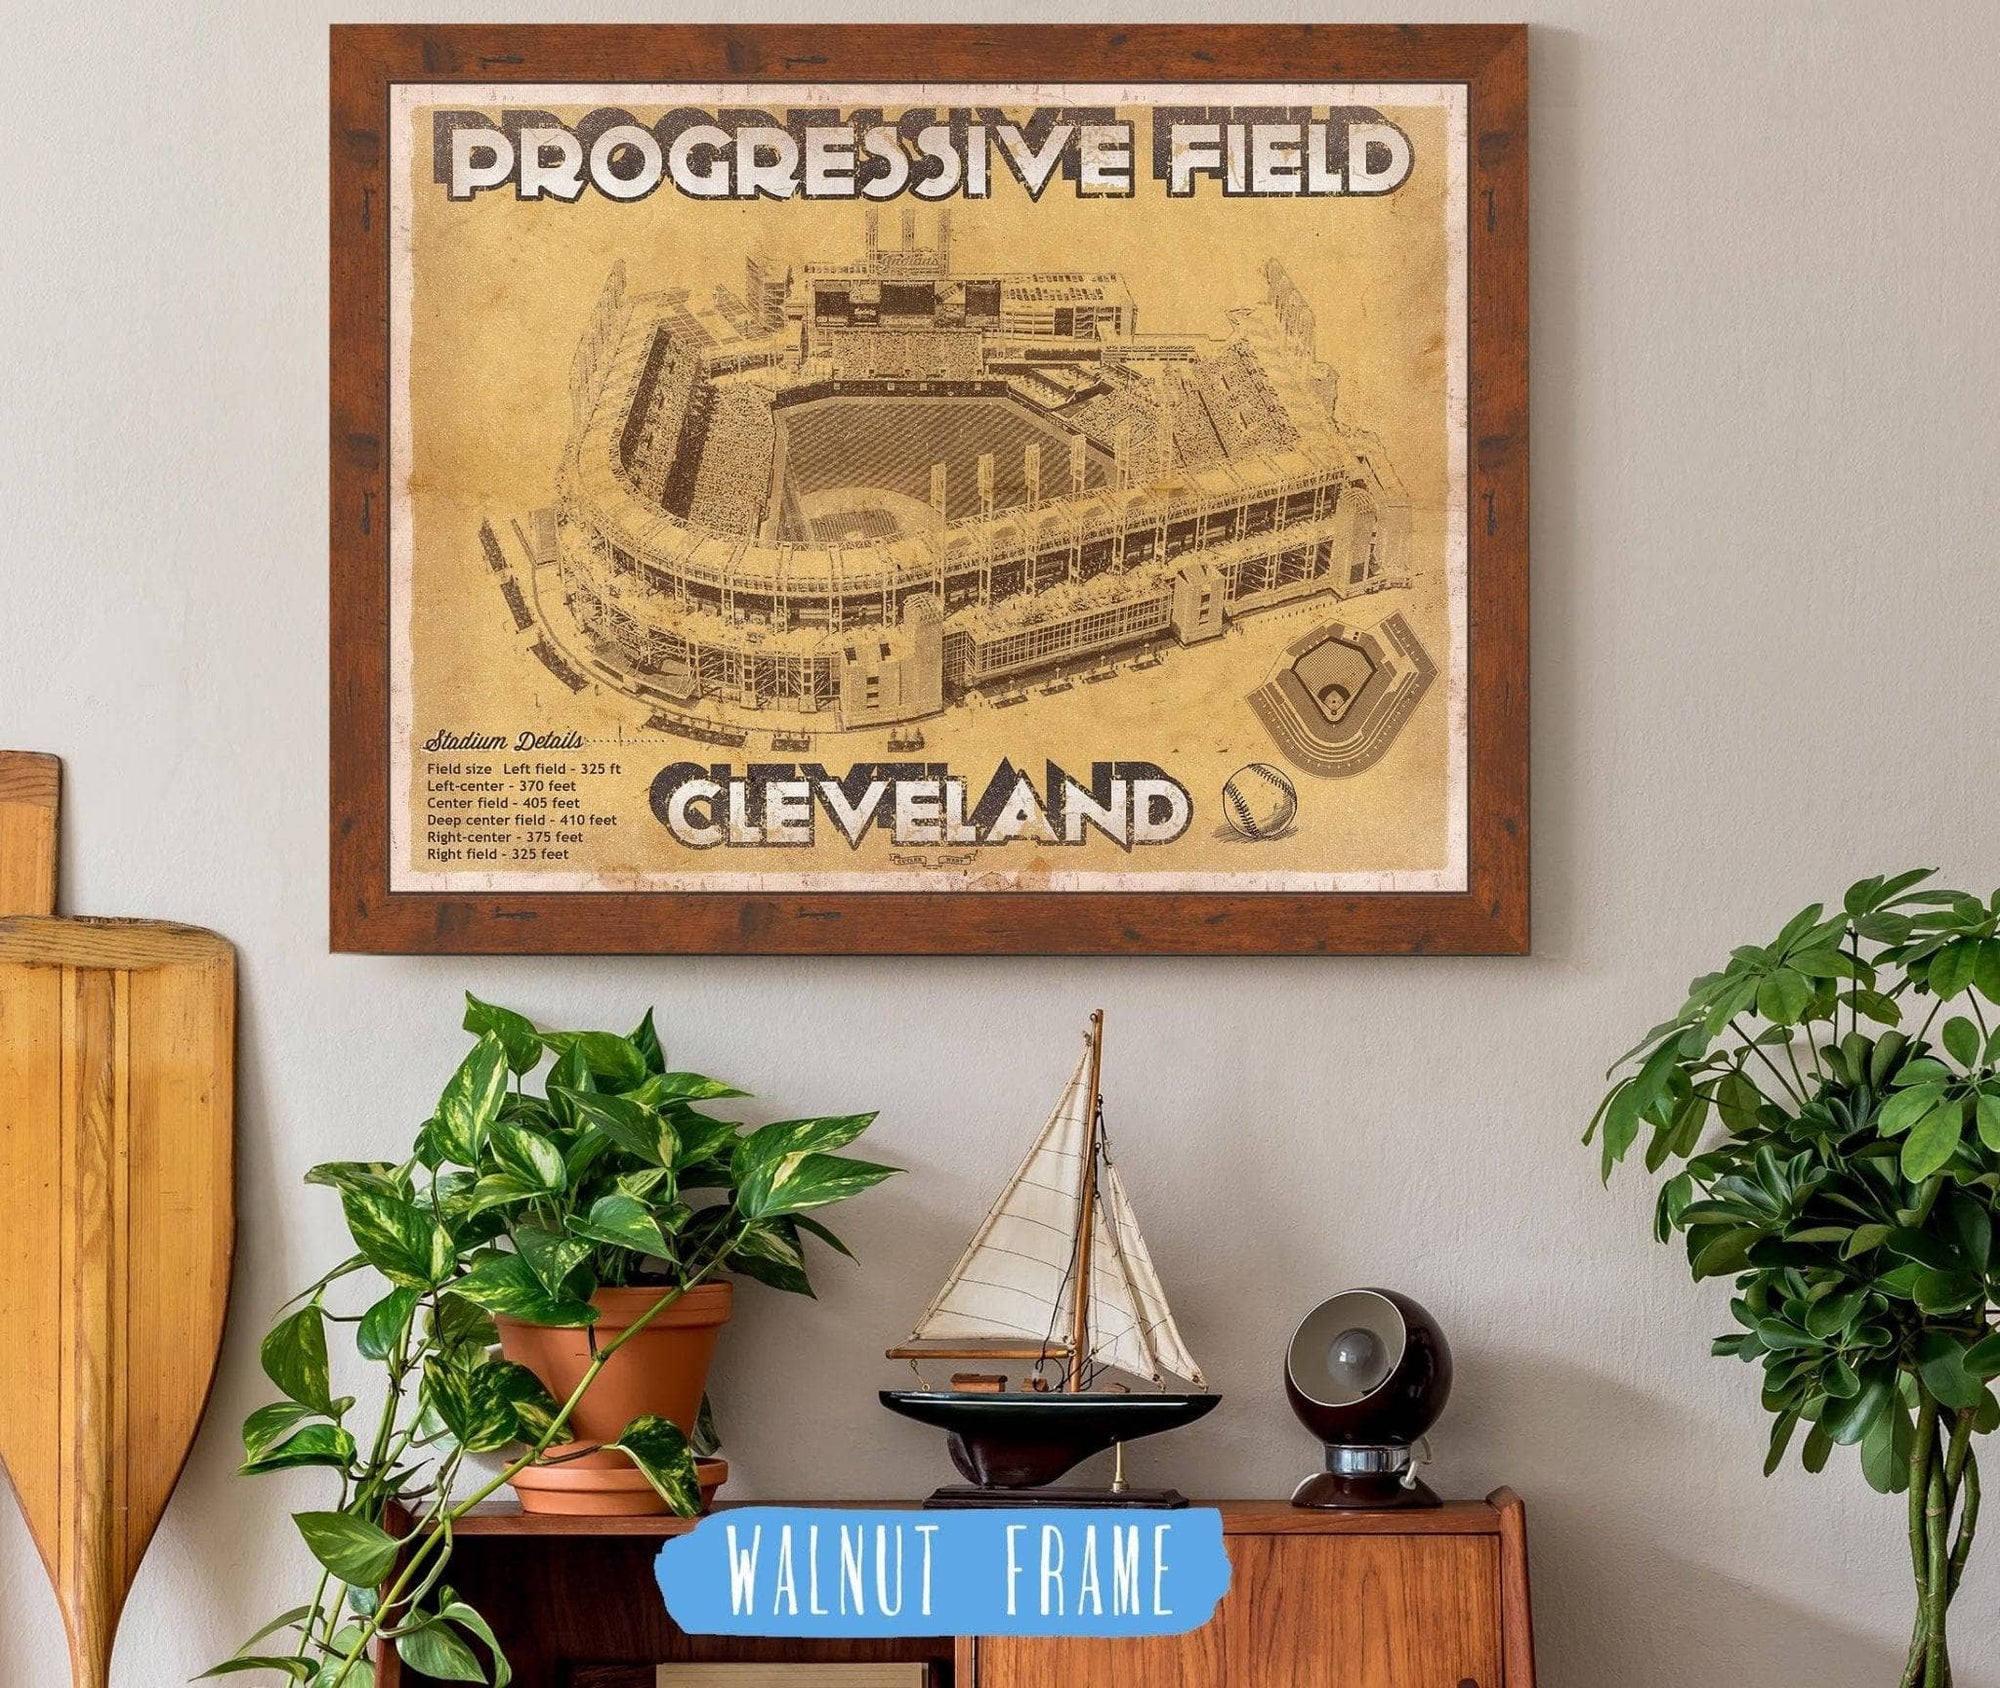 Cutler West Baseball Collection 14" x 11" / Walnut Frame Cleveland Indians Progressive Field Vintage Baseball Print 650217038_68094